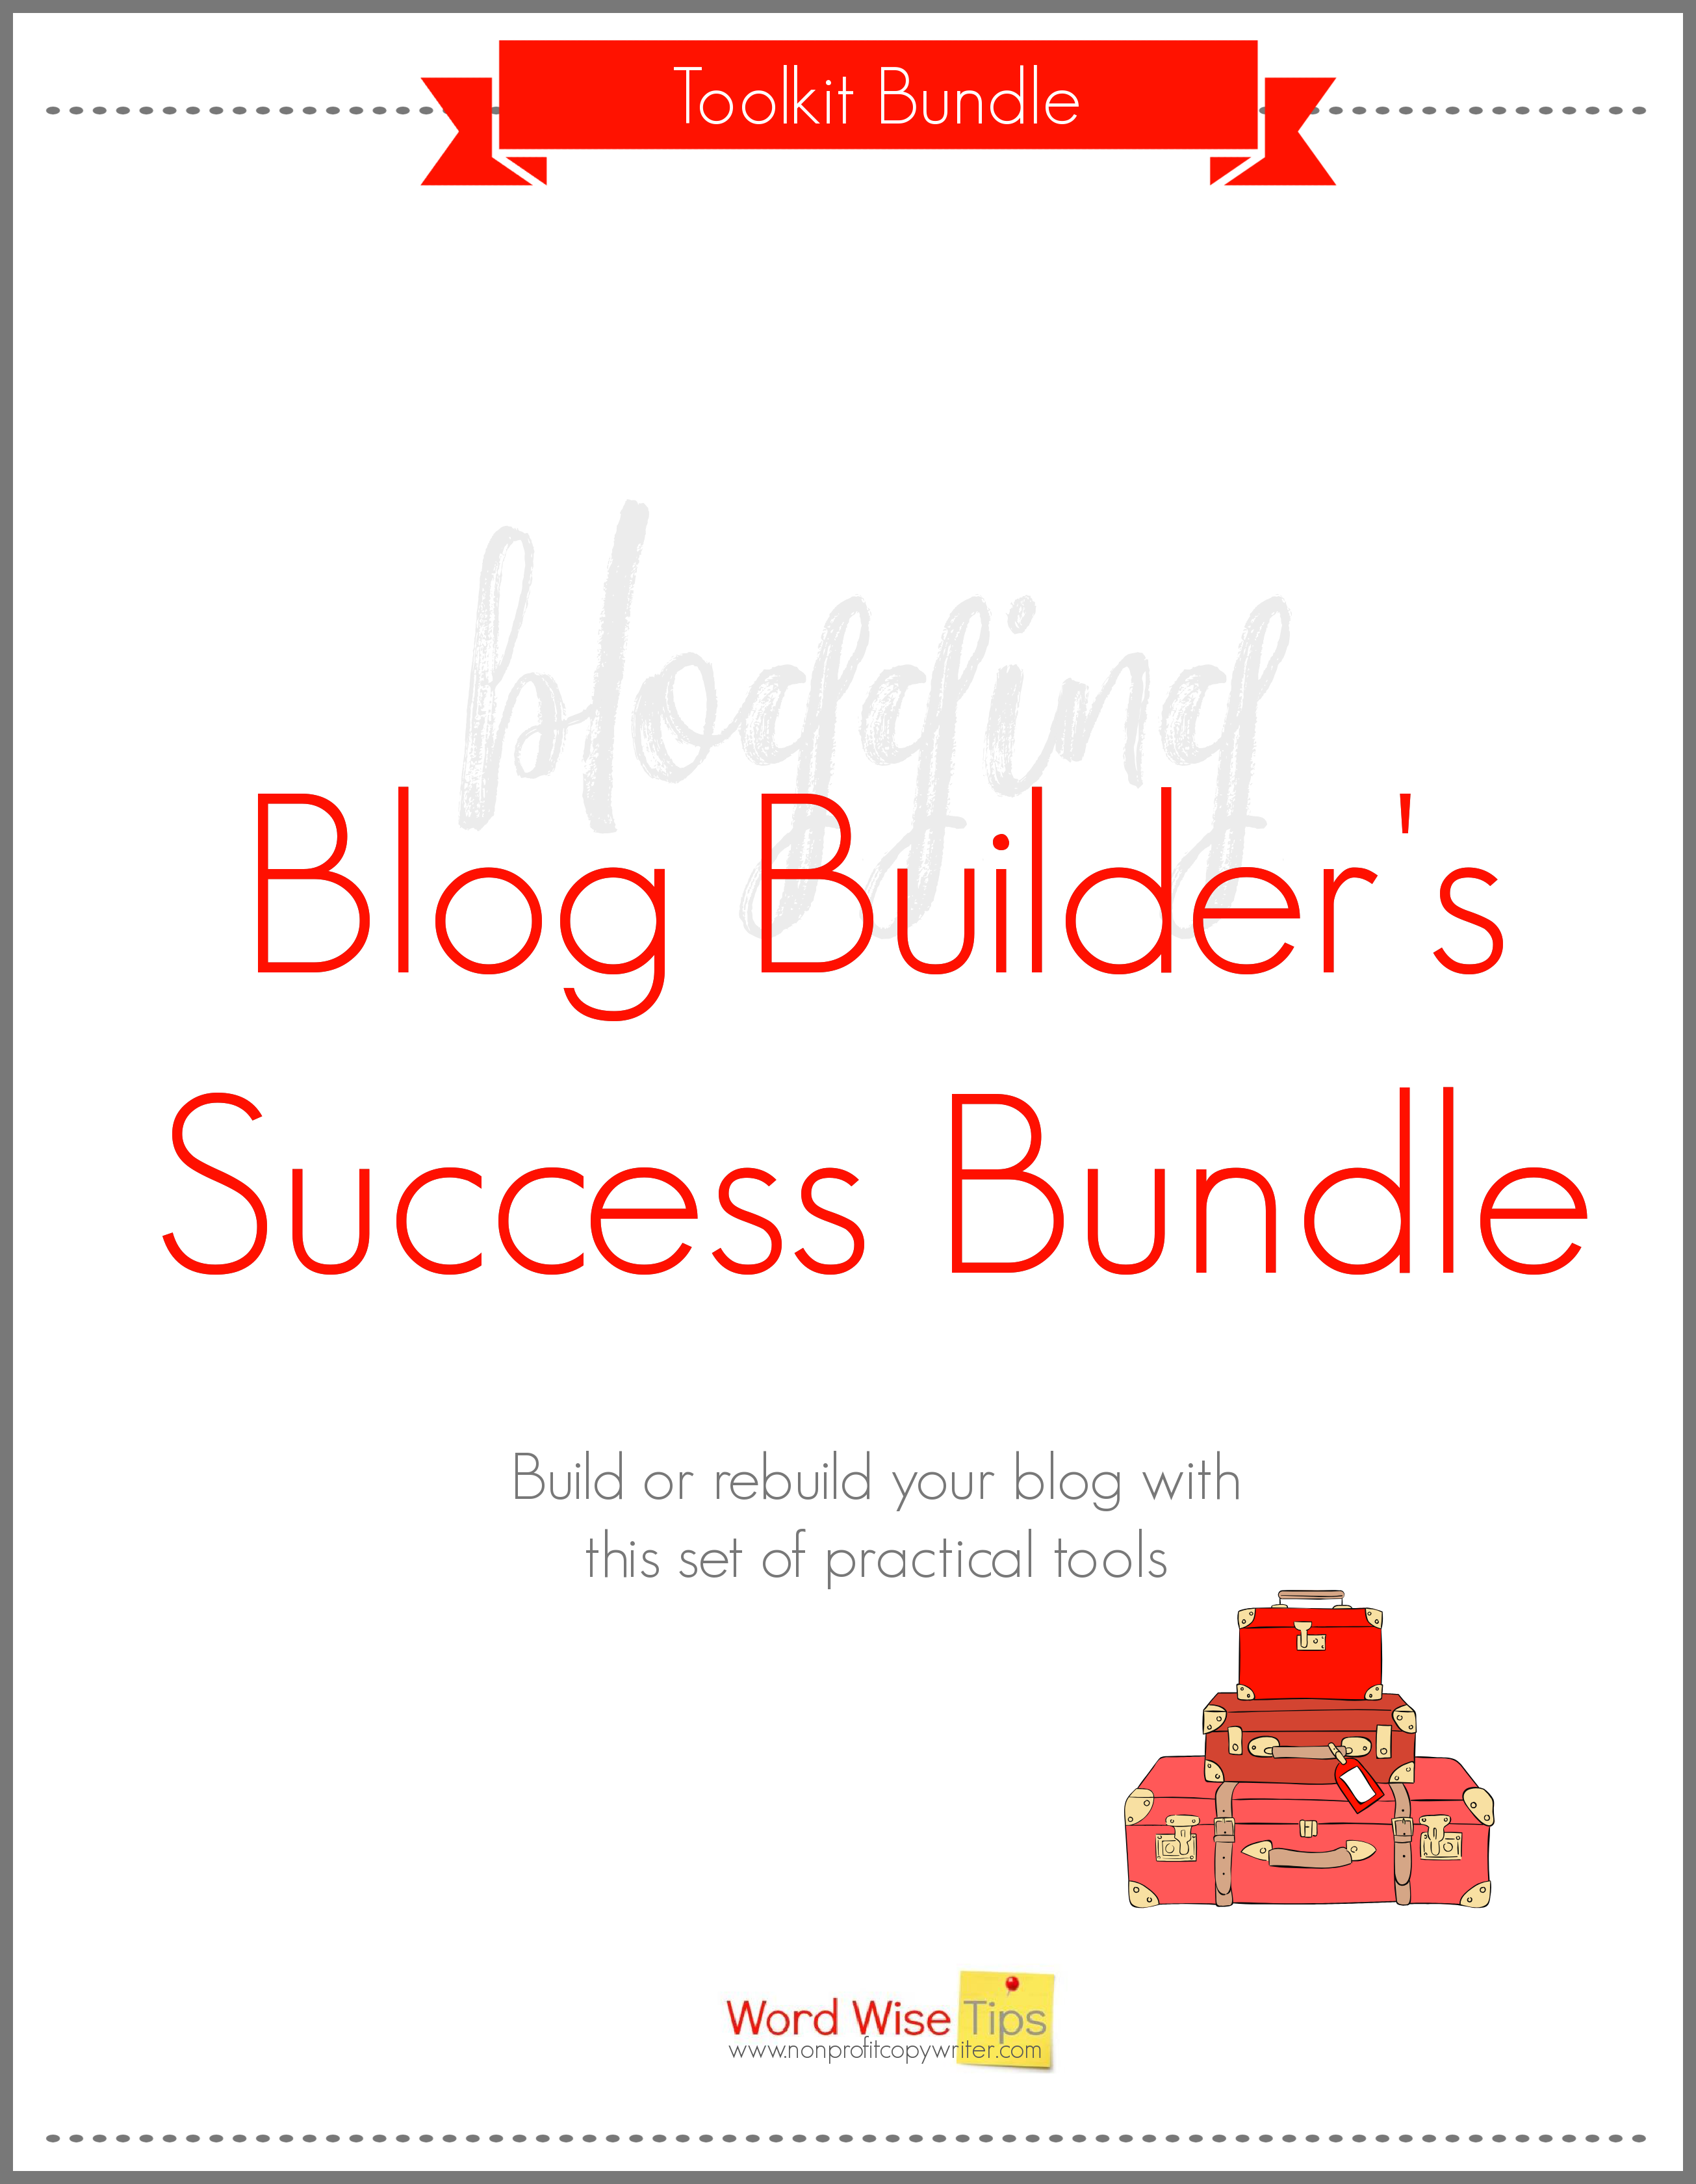 Blog Builder's Success Bundle with Word Wise at Nonprofit Copywriter #Blogging #WritingTips #Printables